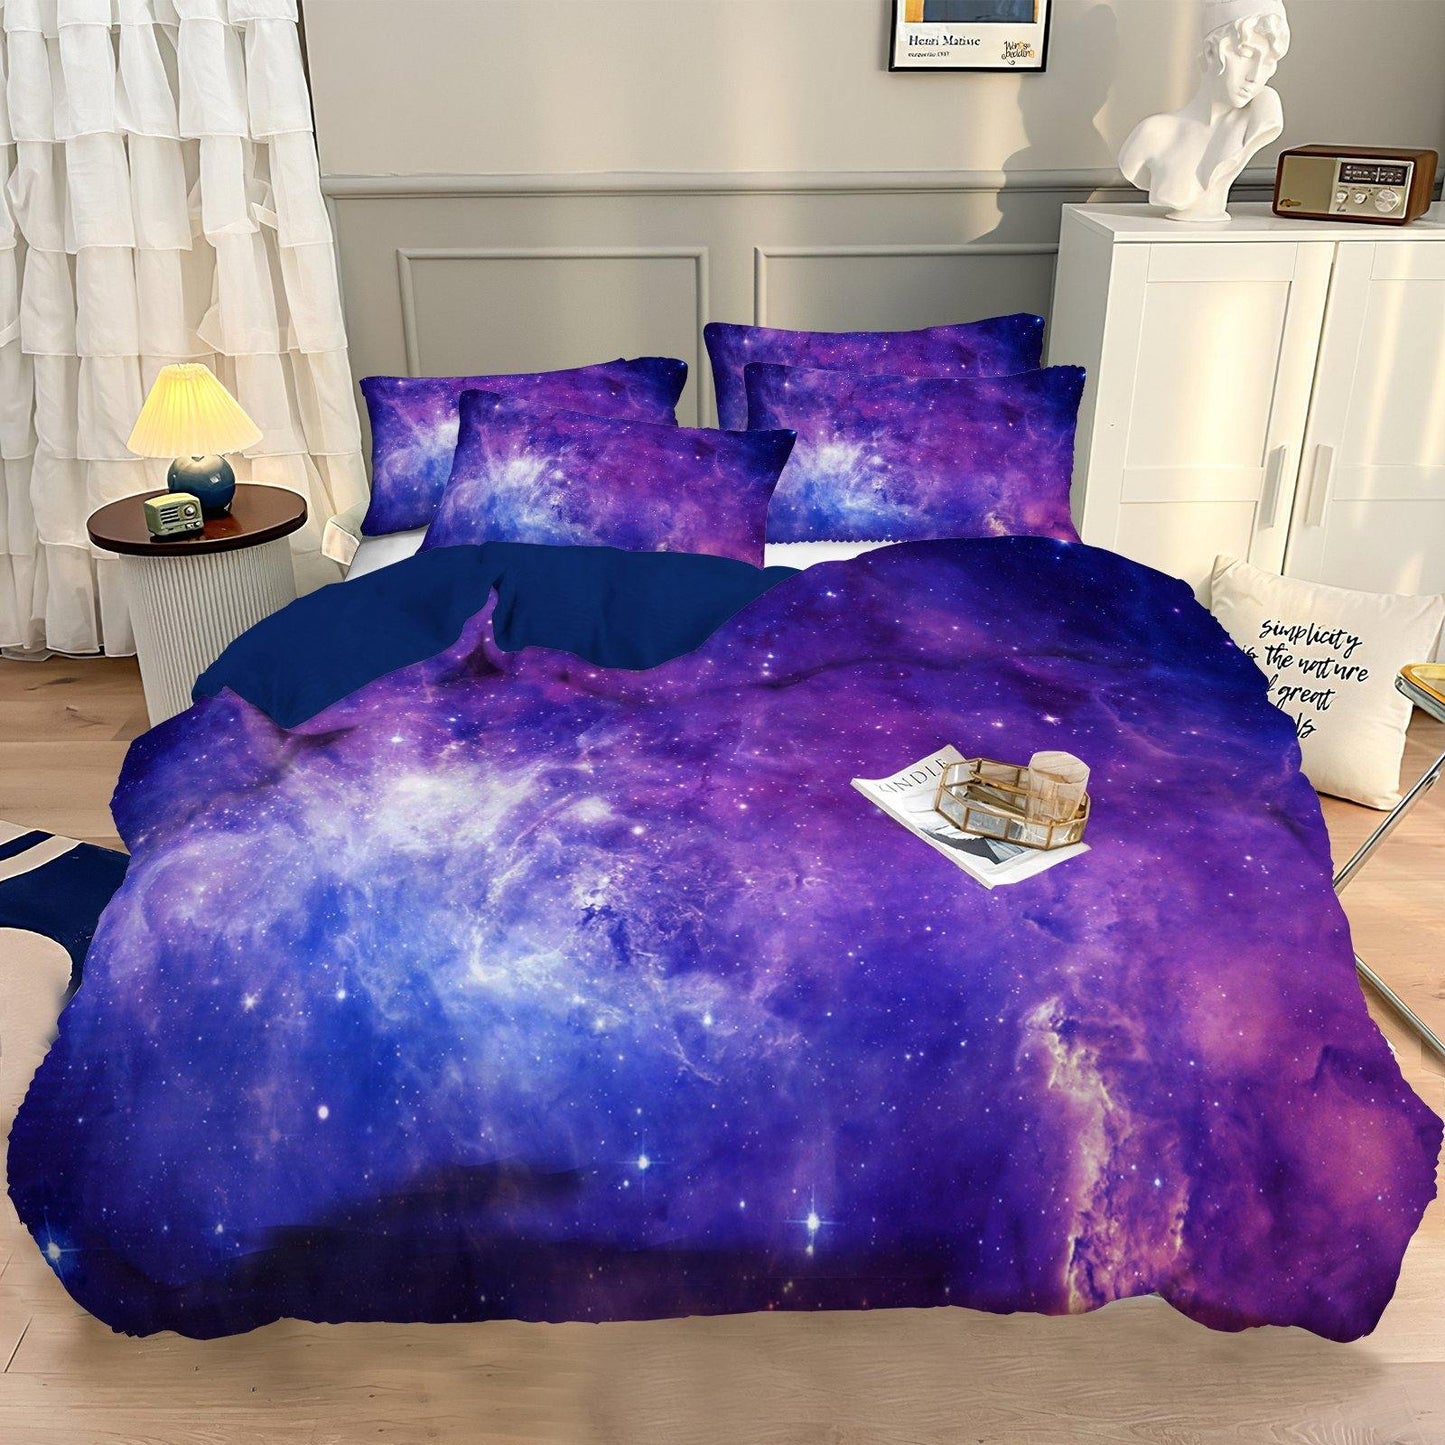 WONGS BEDDING Starry Sky Bedding Bedroom Home Kit - Wongs bedding